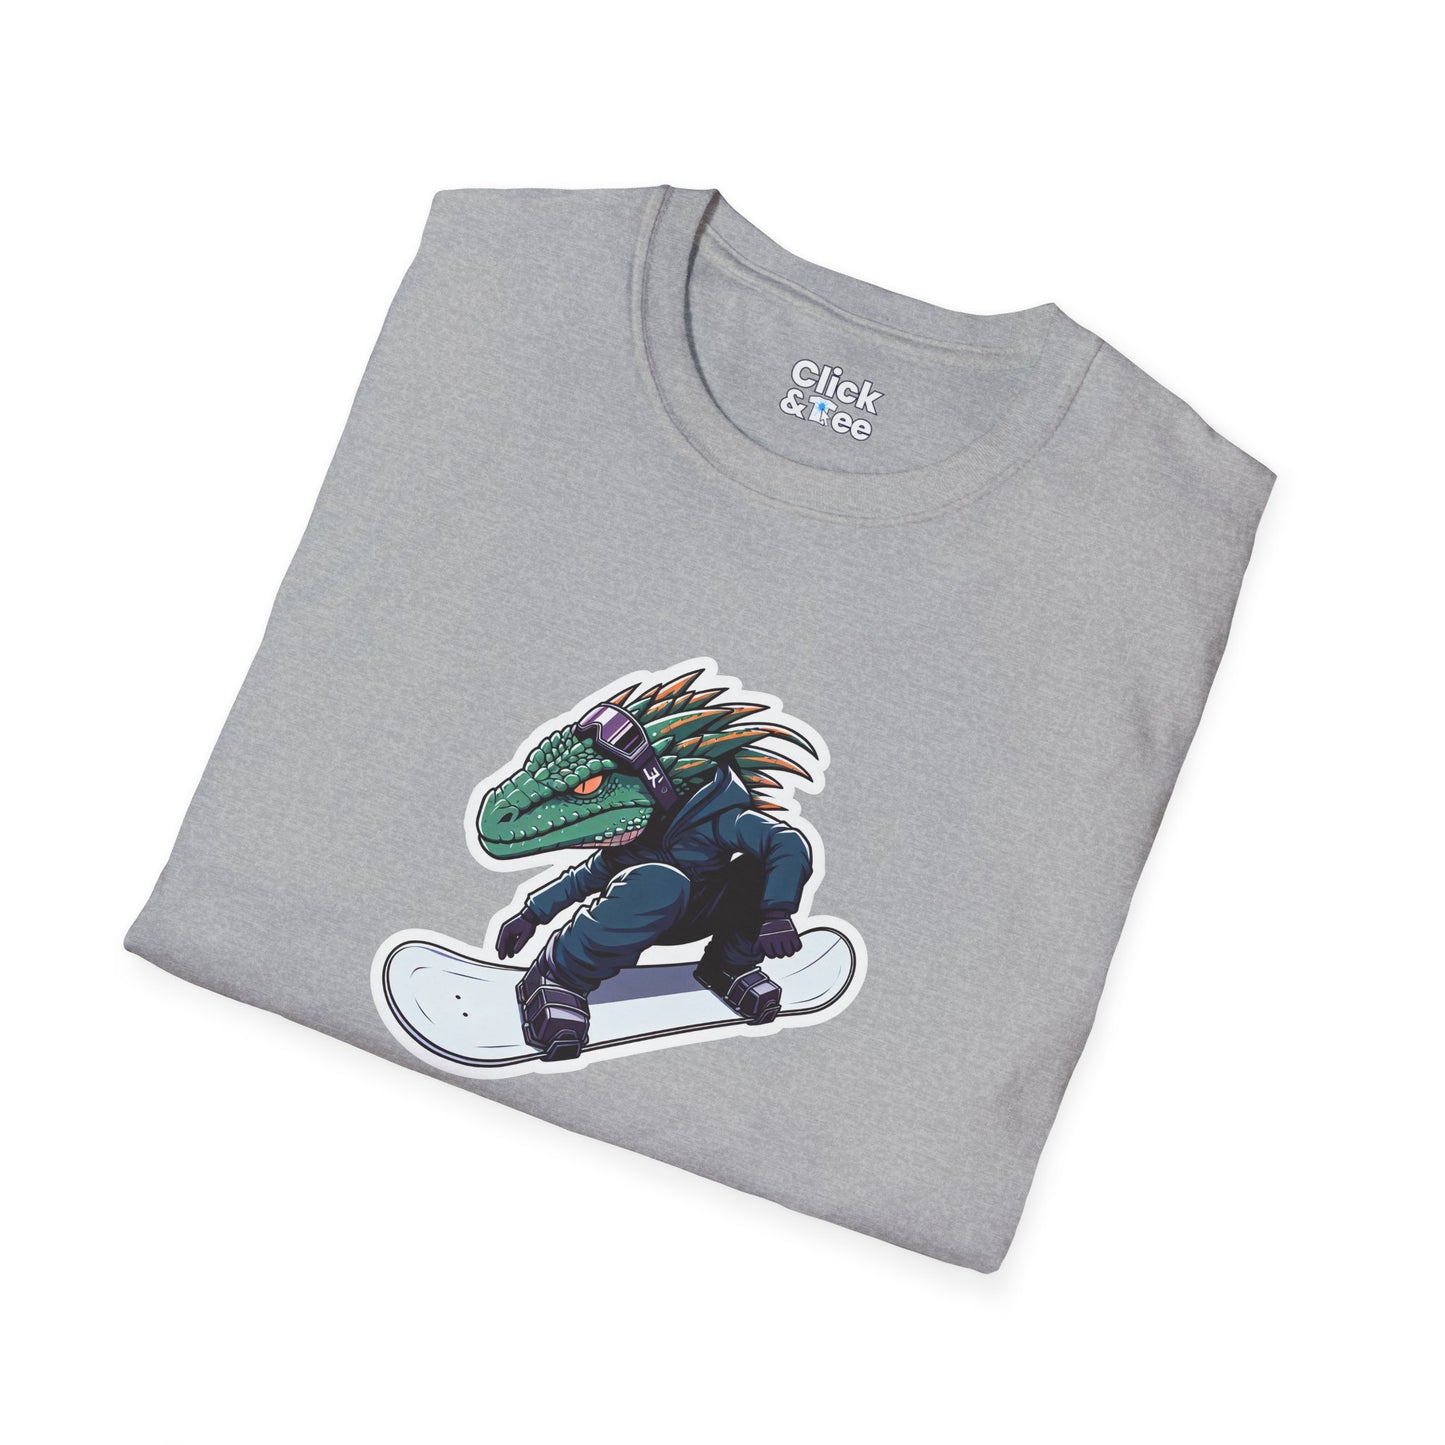 Unique T-Shirt - Heroic Lizard Snowboarder Flying through the air - Shonen Anime Style T-Shirt